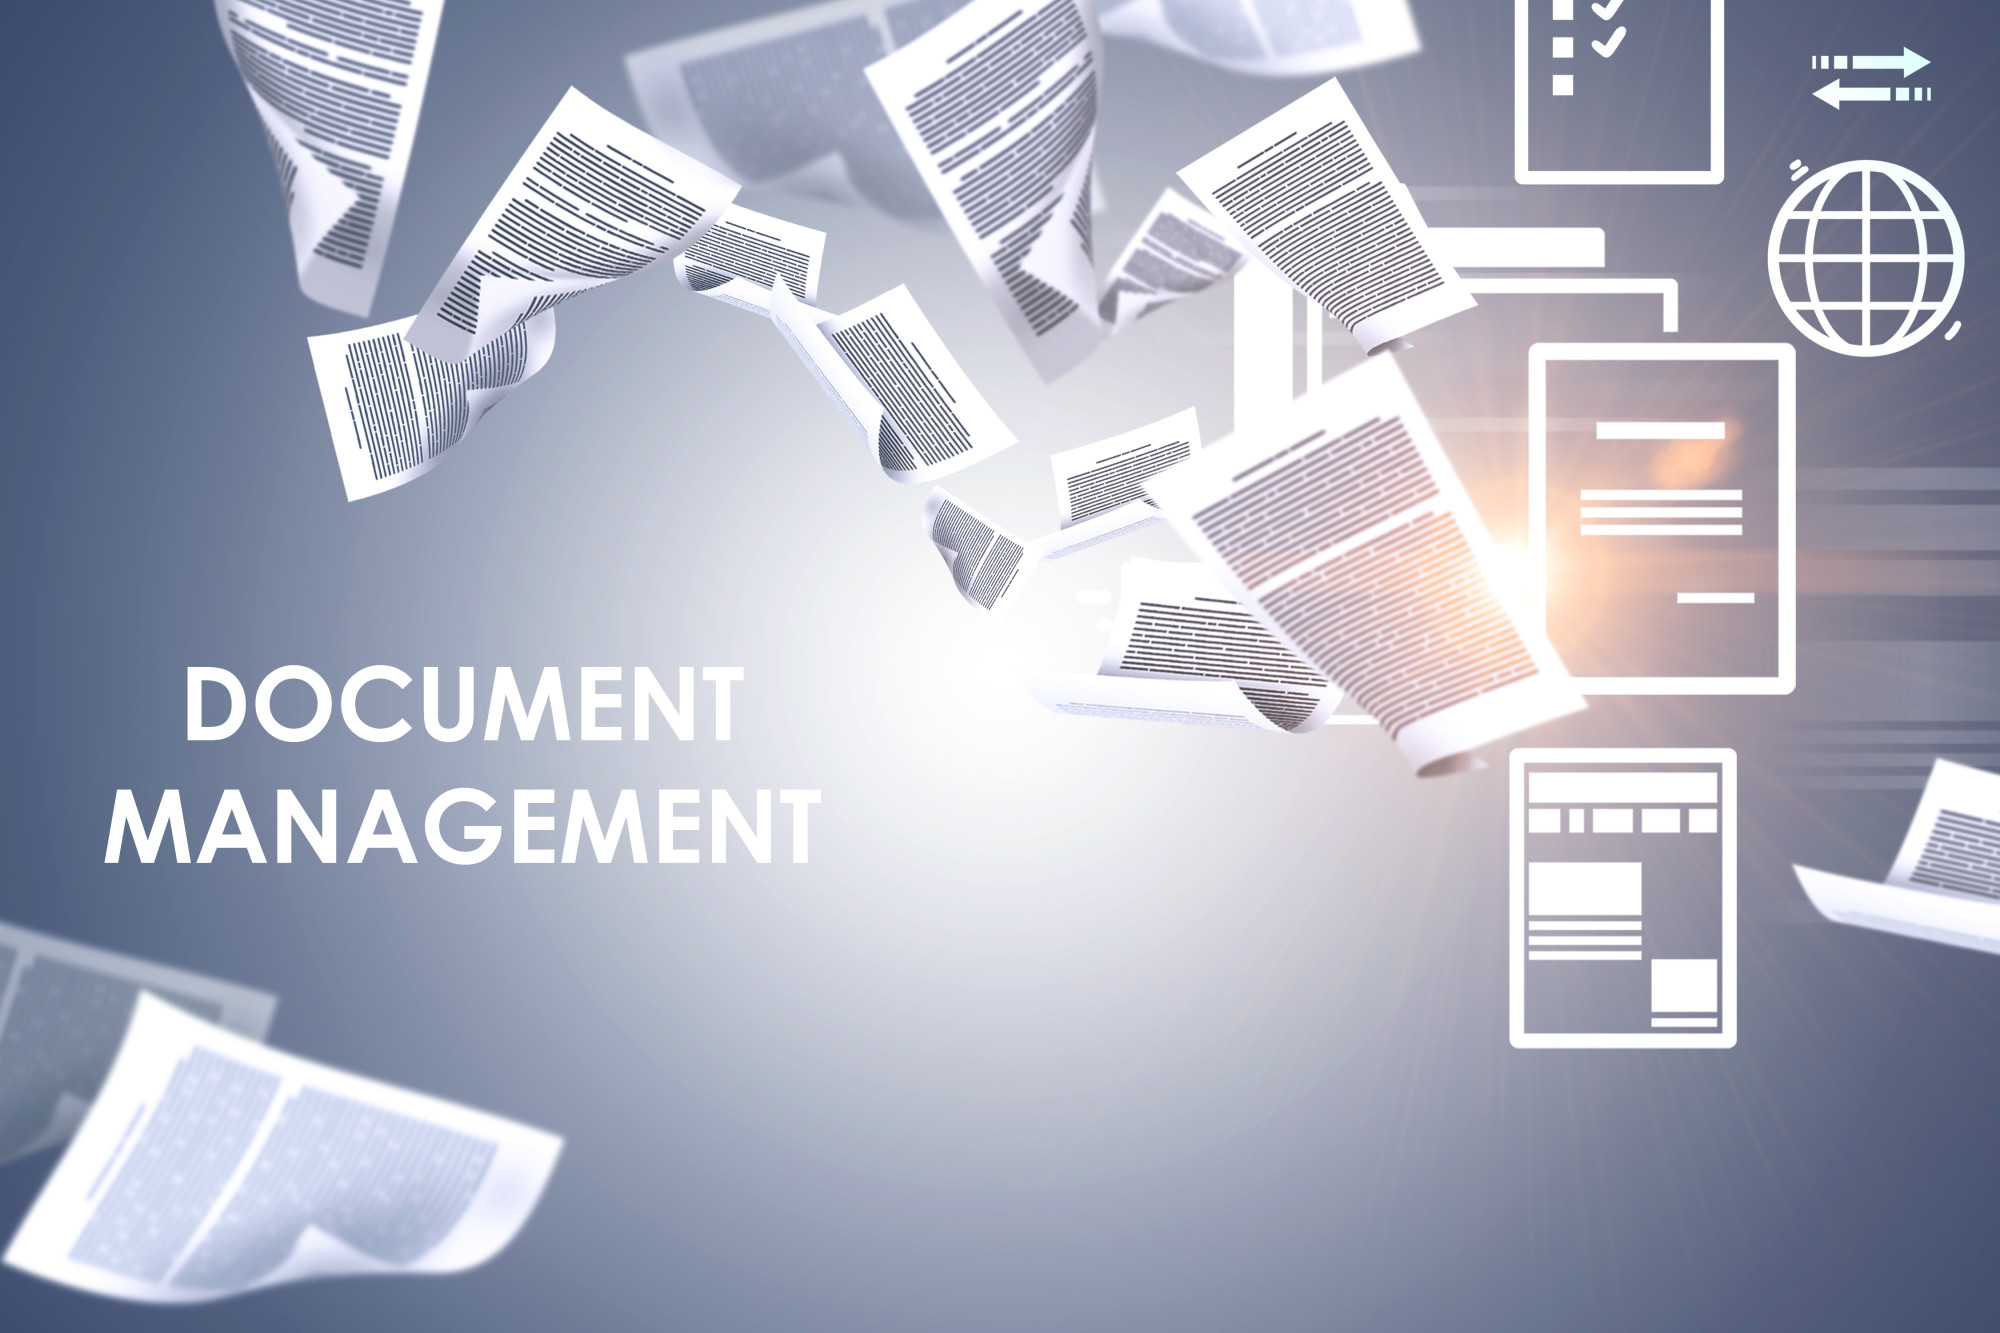 document management system